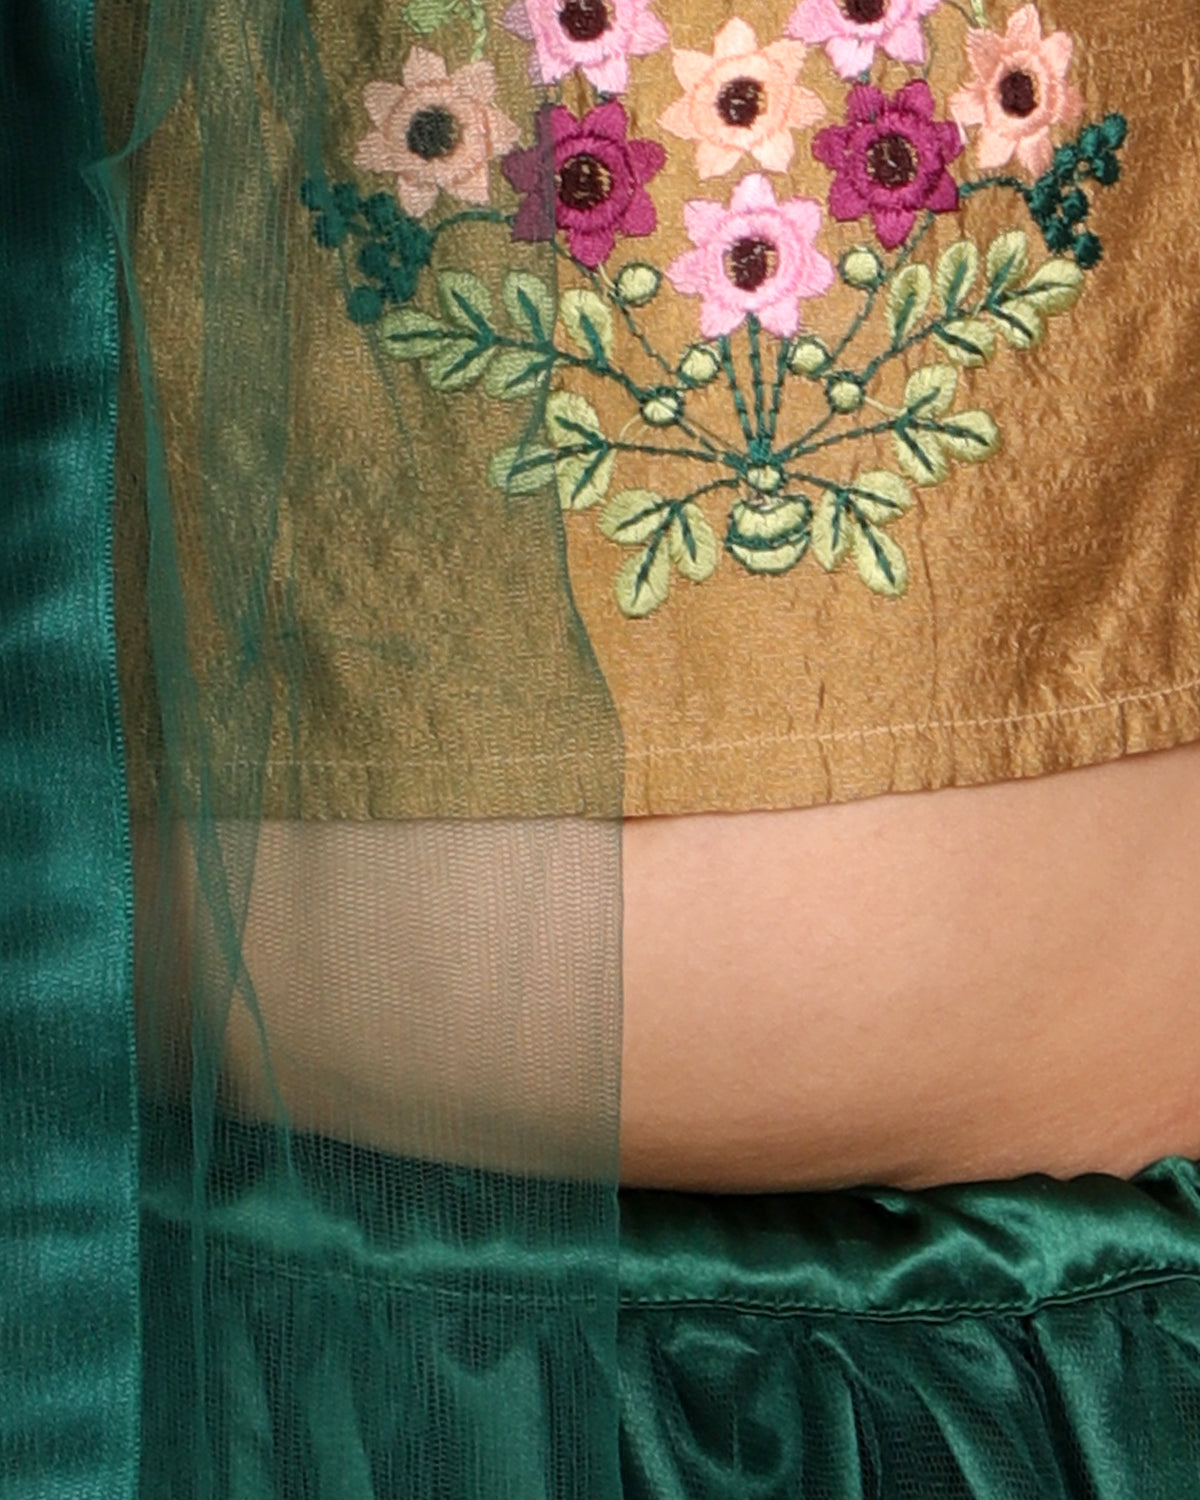 Girls Embroidered Lehnga Choli Set With Dupatta (Beige & Green)